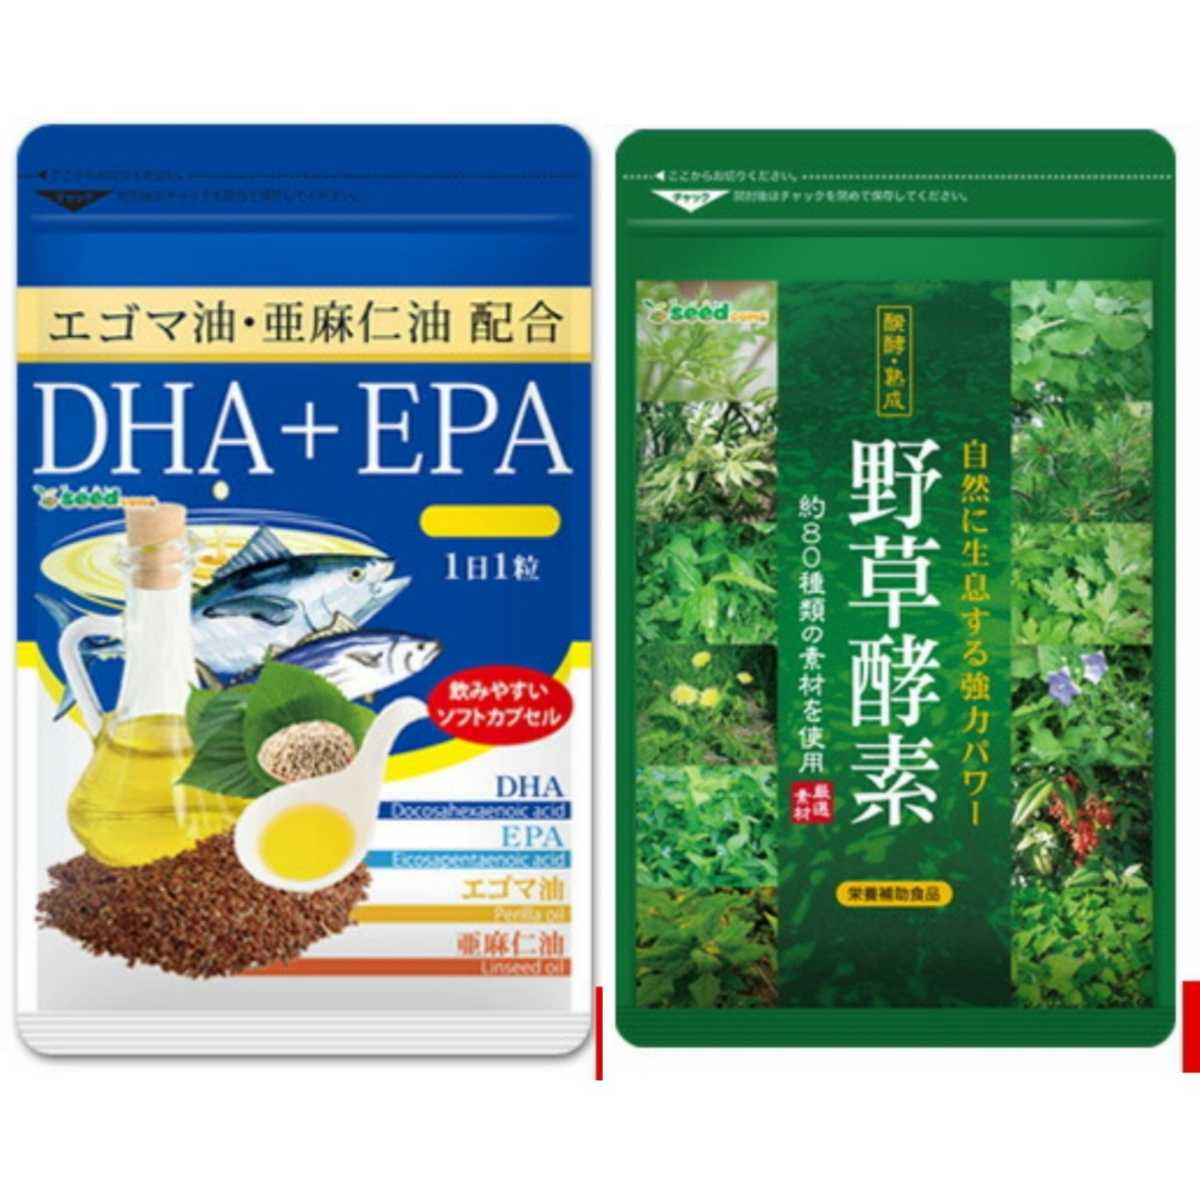 DHA + EPA エゴマ油 亜麻仁油 3ヵ月分×1袋 野草酵素3ヶ月分×1袋　シードコムス_画像1